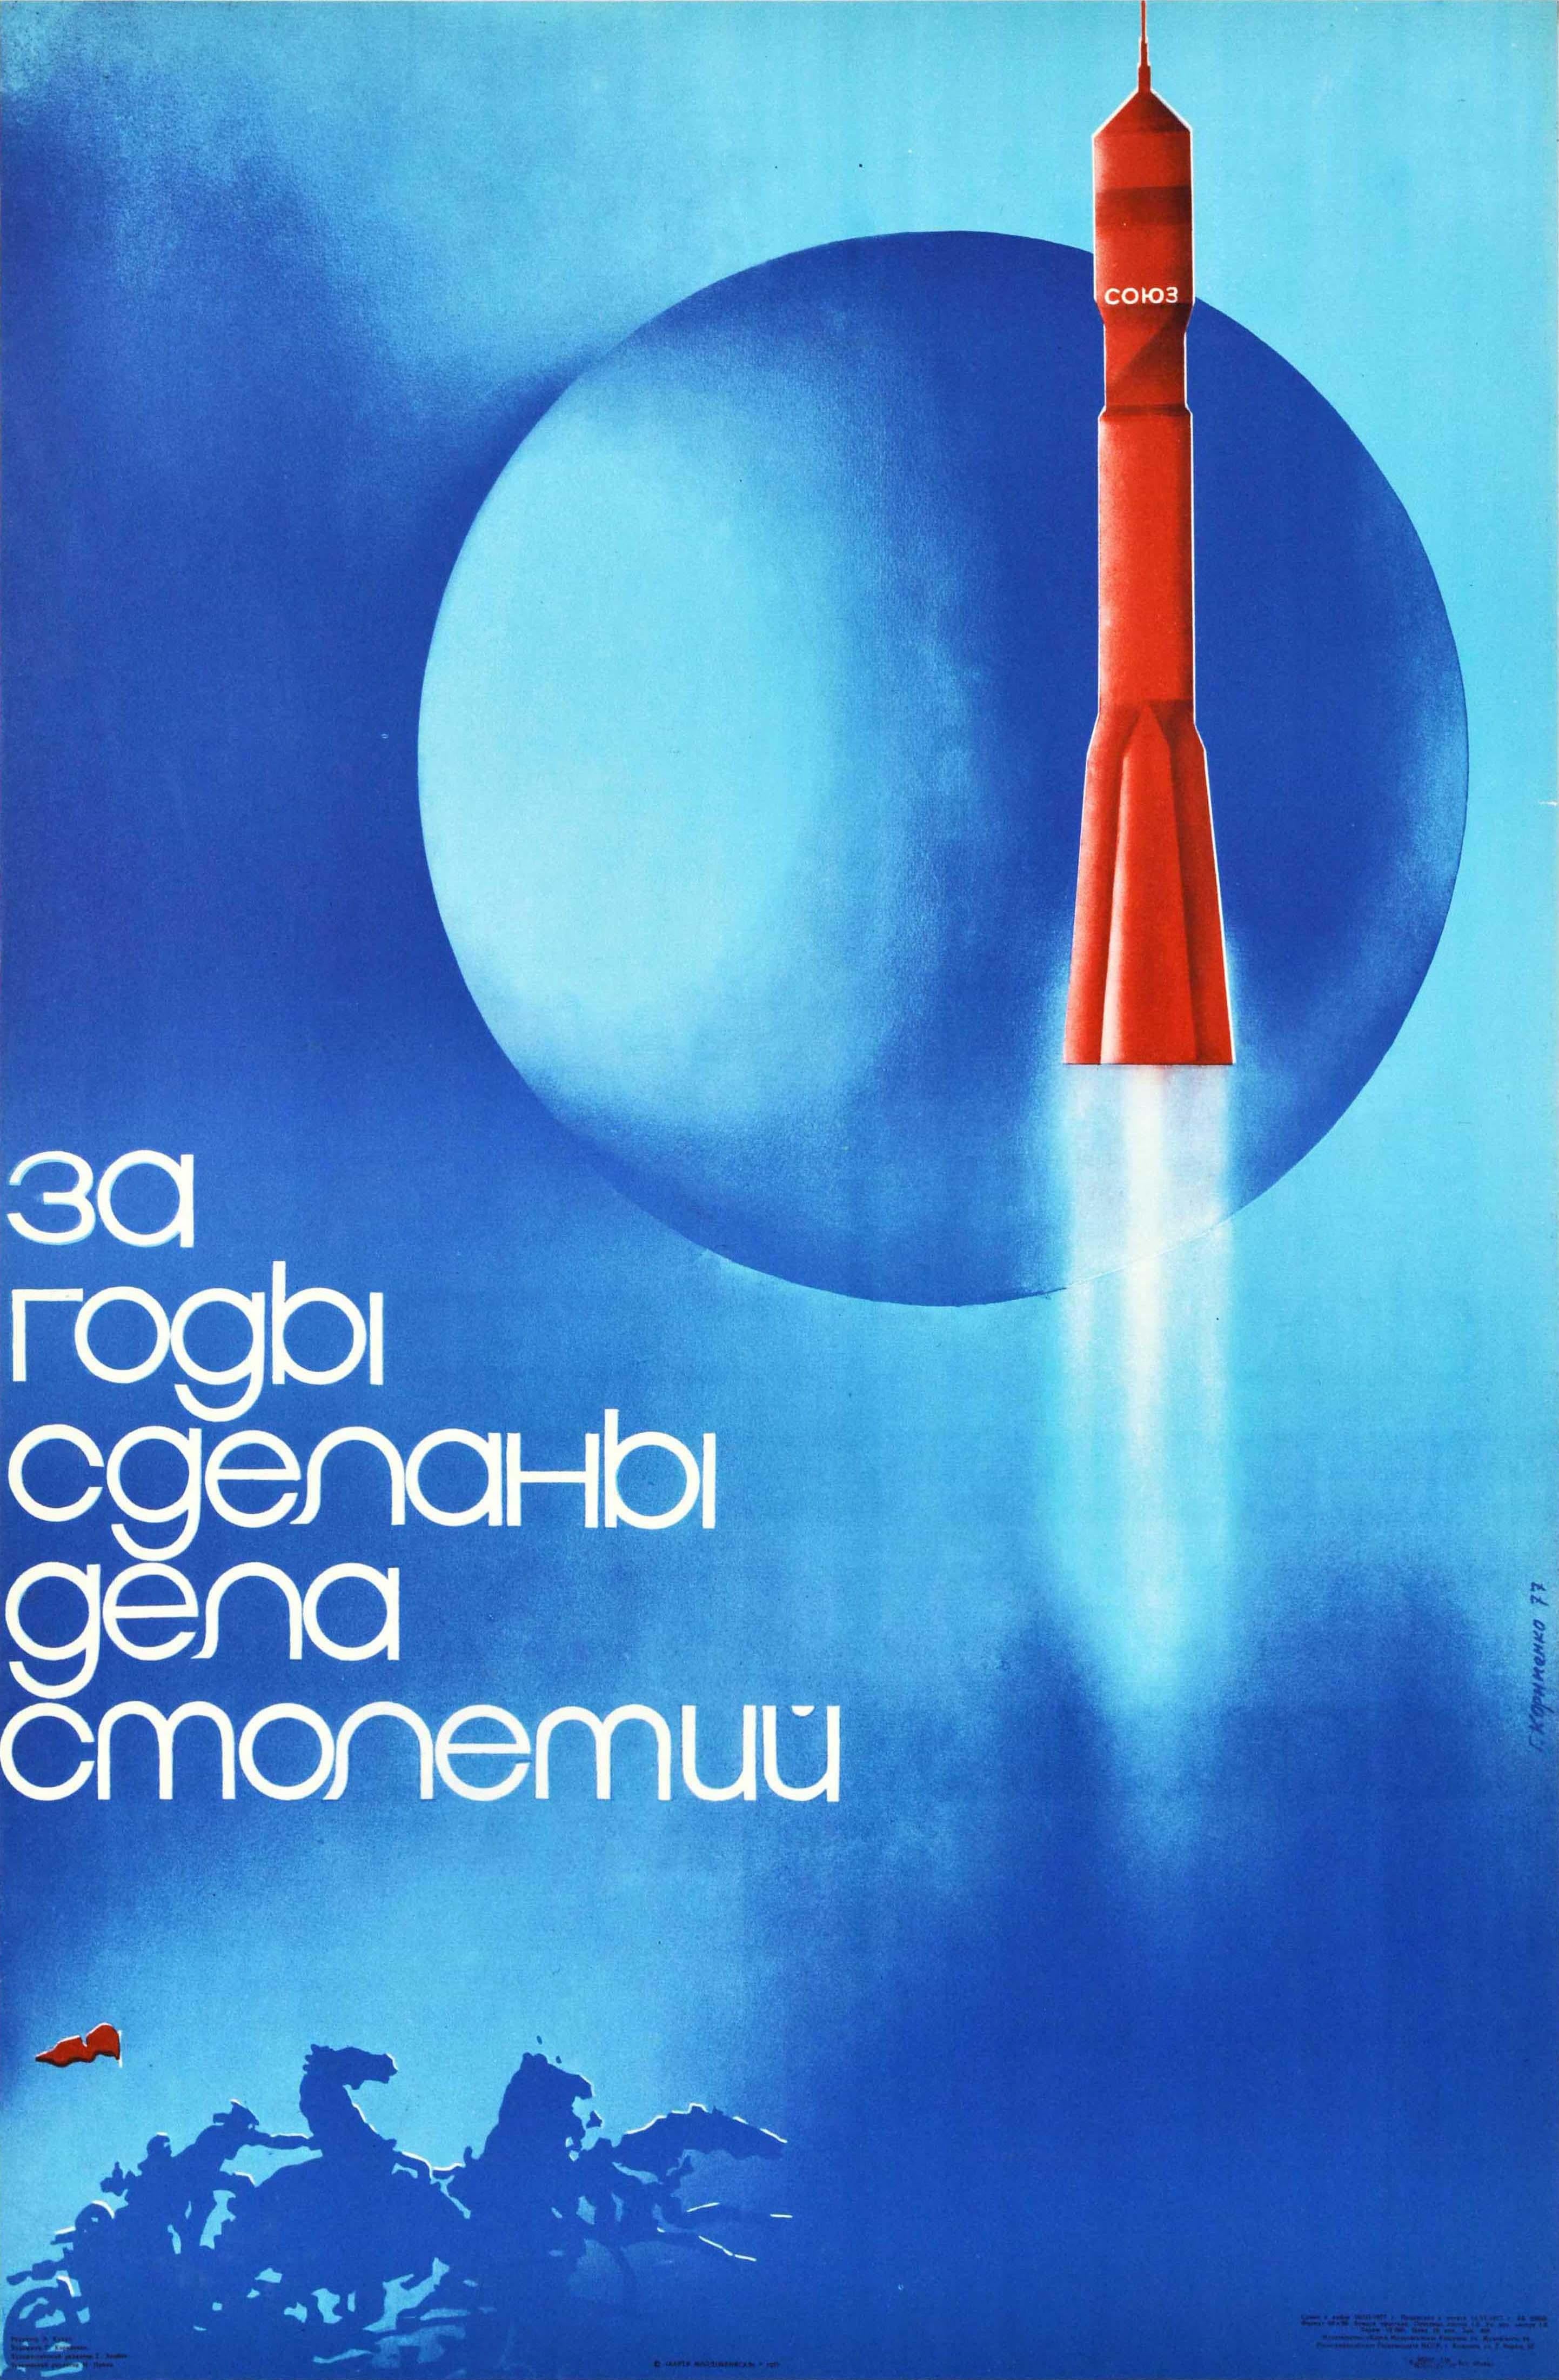 G Kornienko Print - Original Vintage Soviet Space Achievements Rocket USSR Soyuz Astronaut Cosmonaut